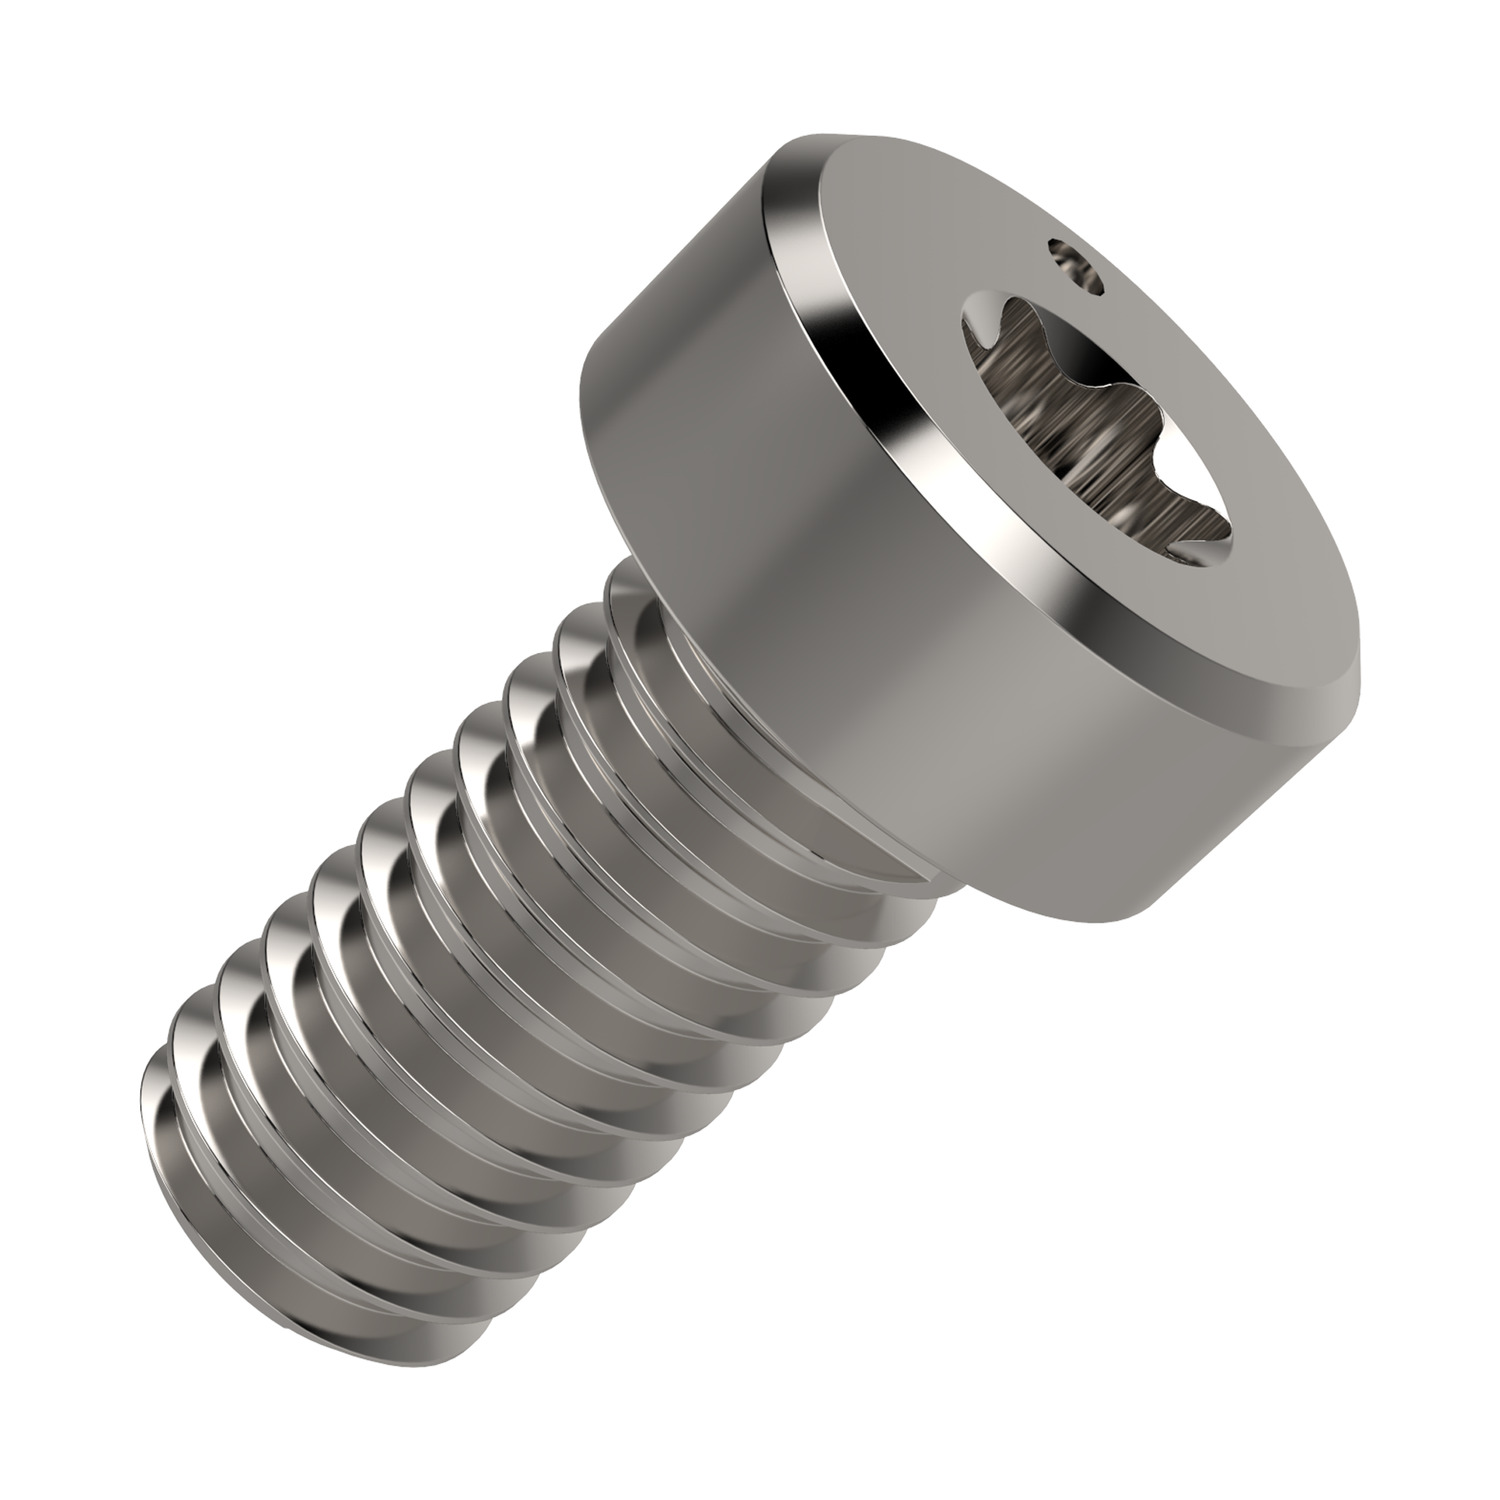 P0050.040-EN Eccentric clamp screws M4 nickel plated Electroless nickel plating